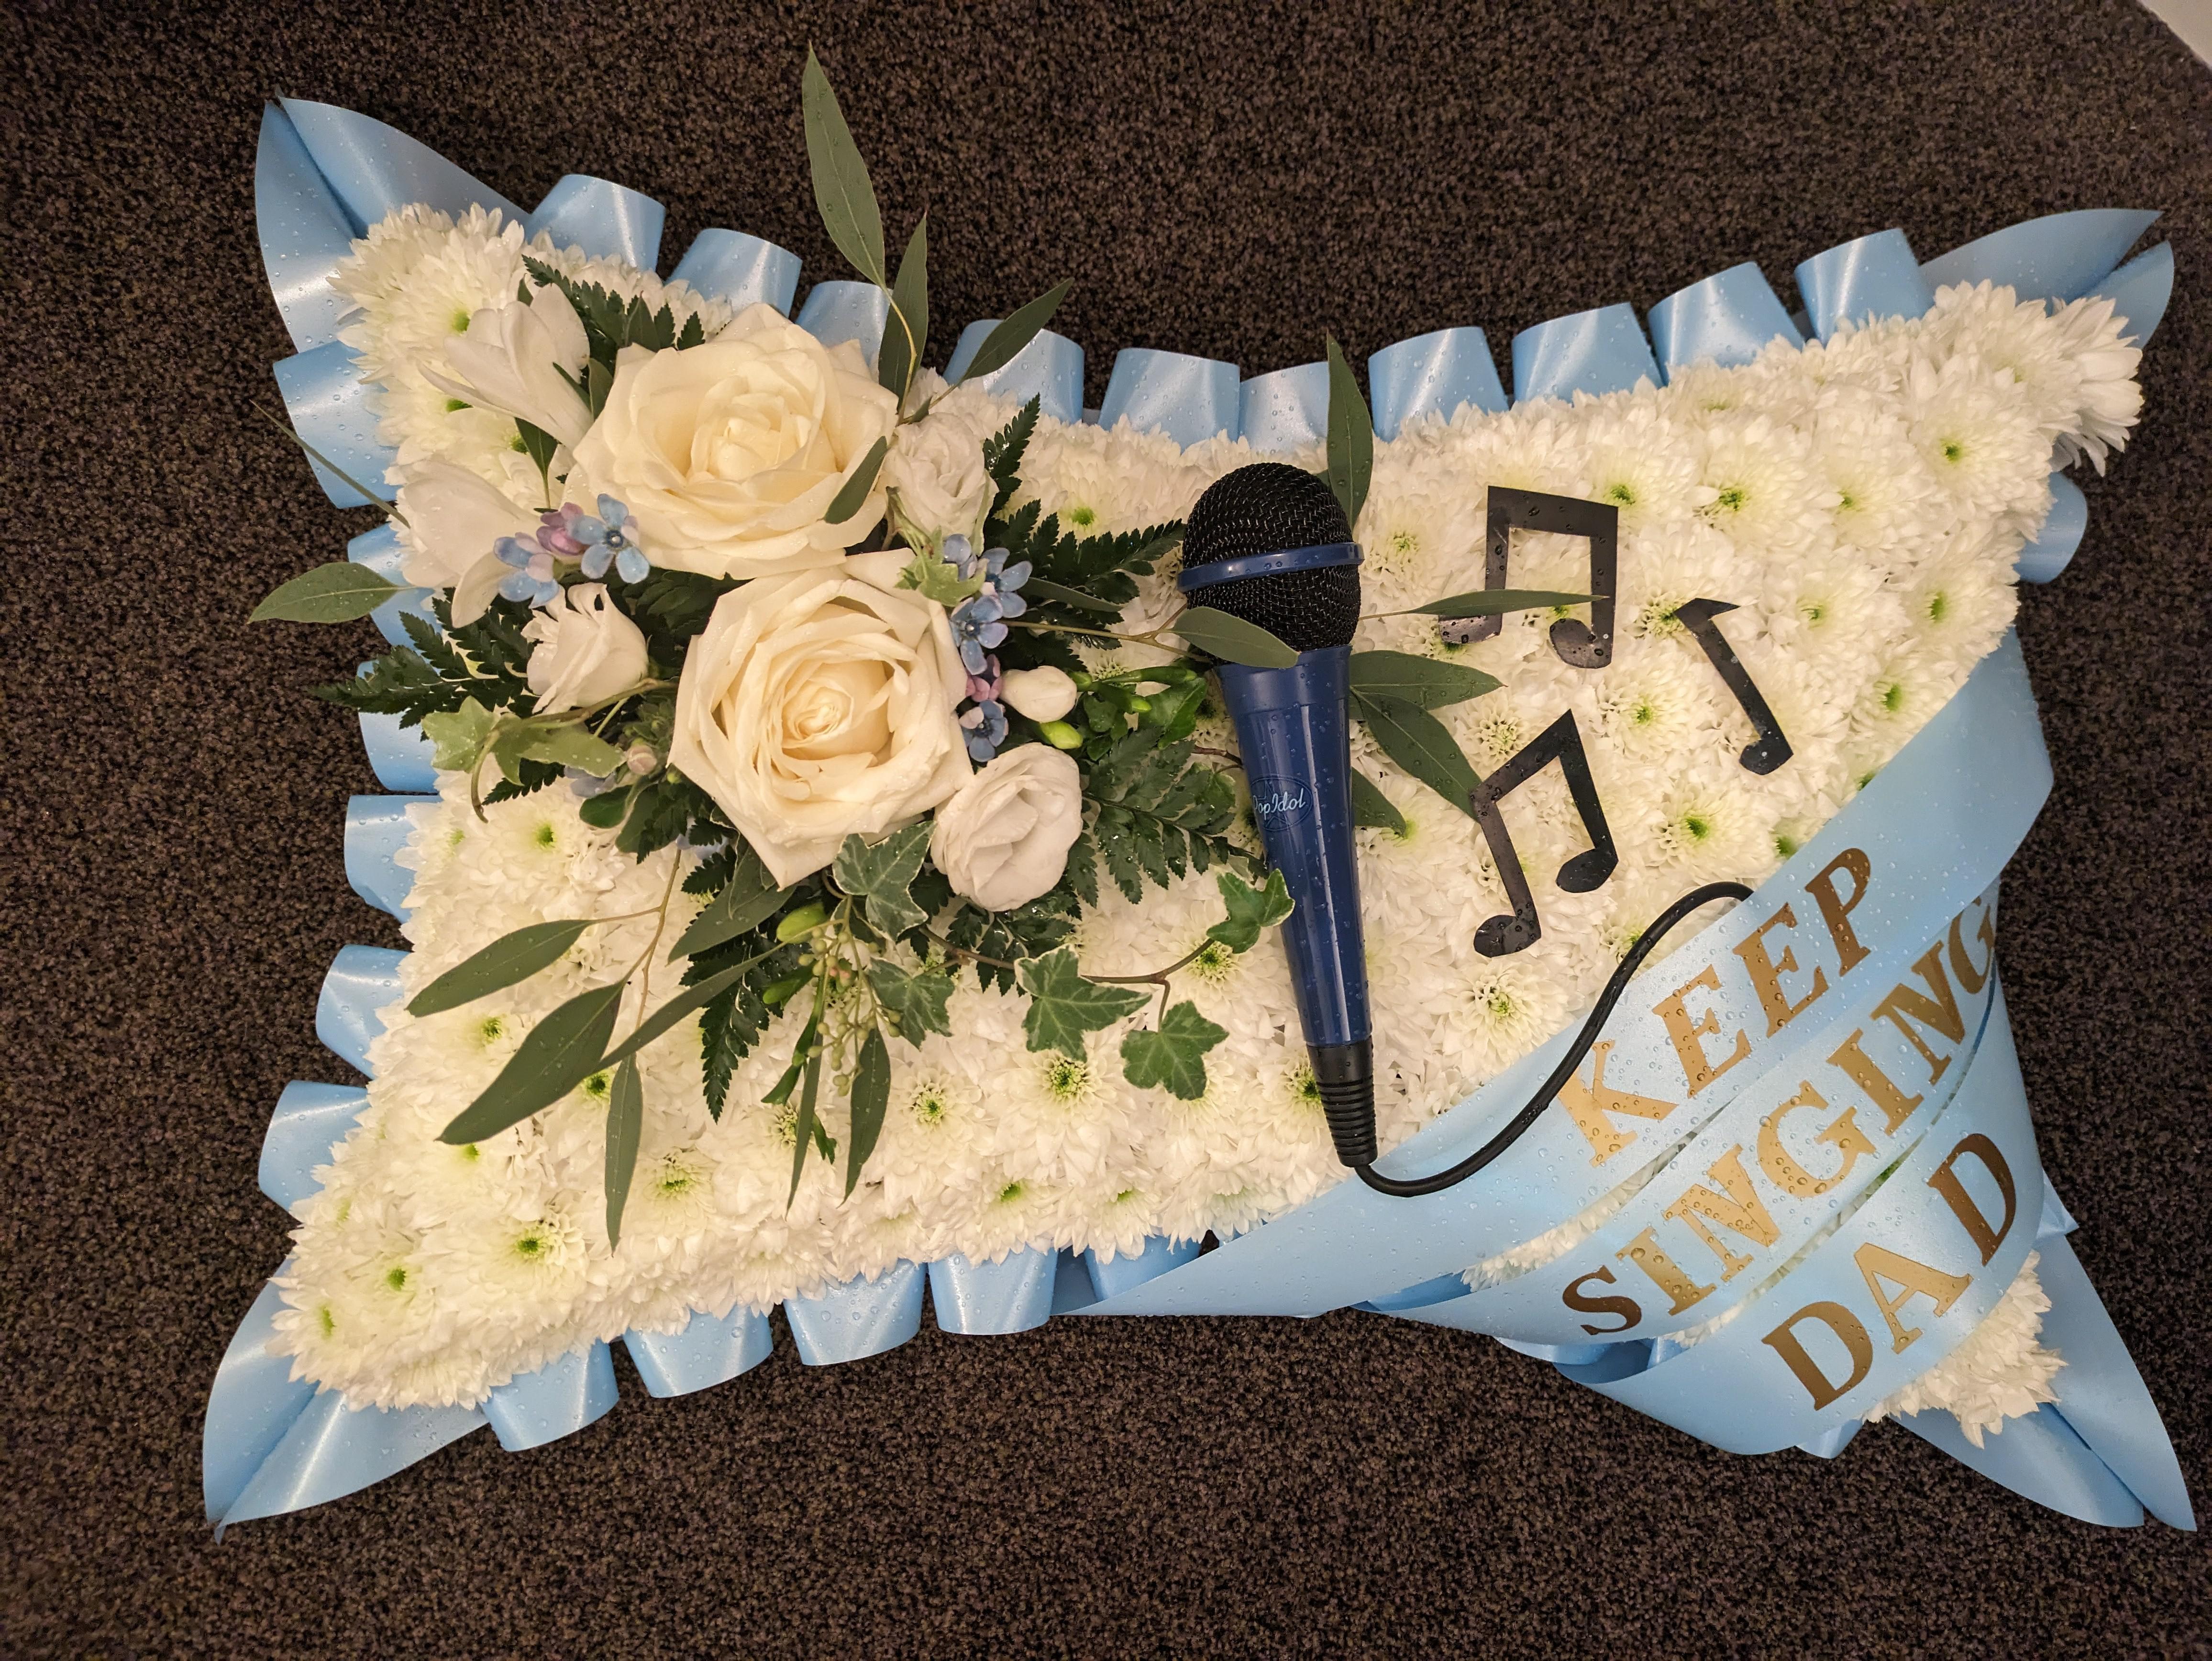 A bespoke floral arrangement for a singer Congleton Funeralcare Congleton 01260 270290